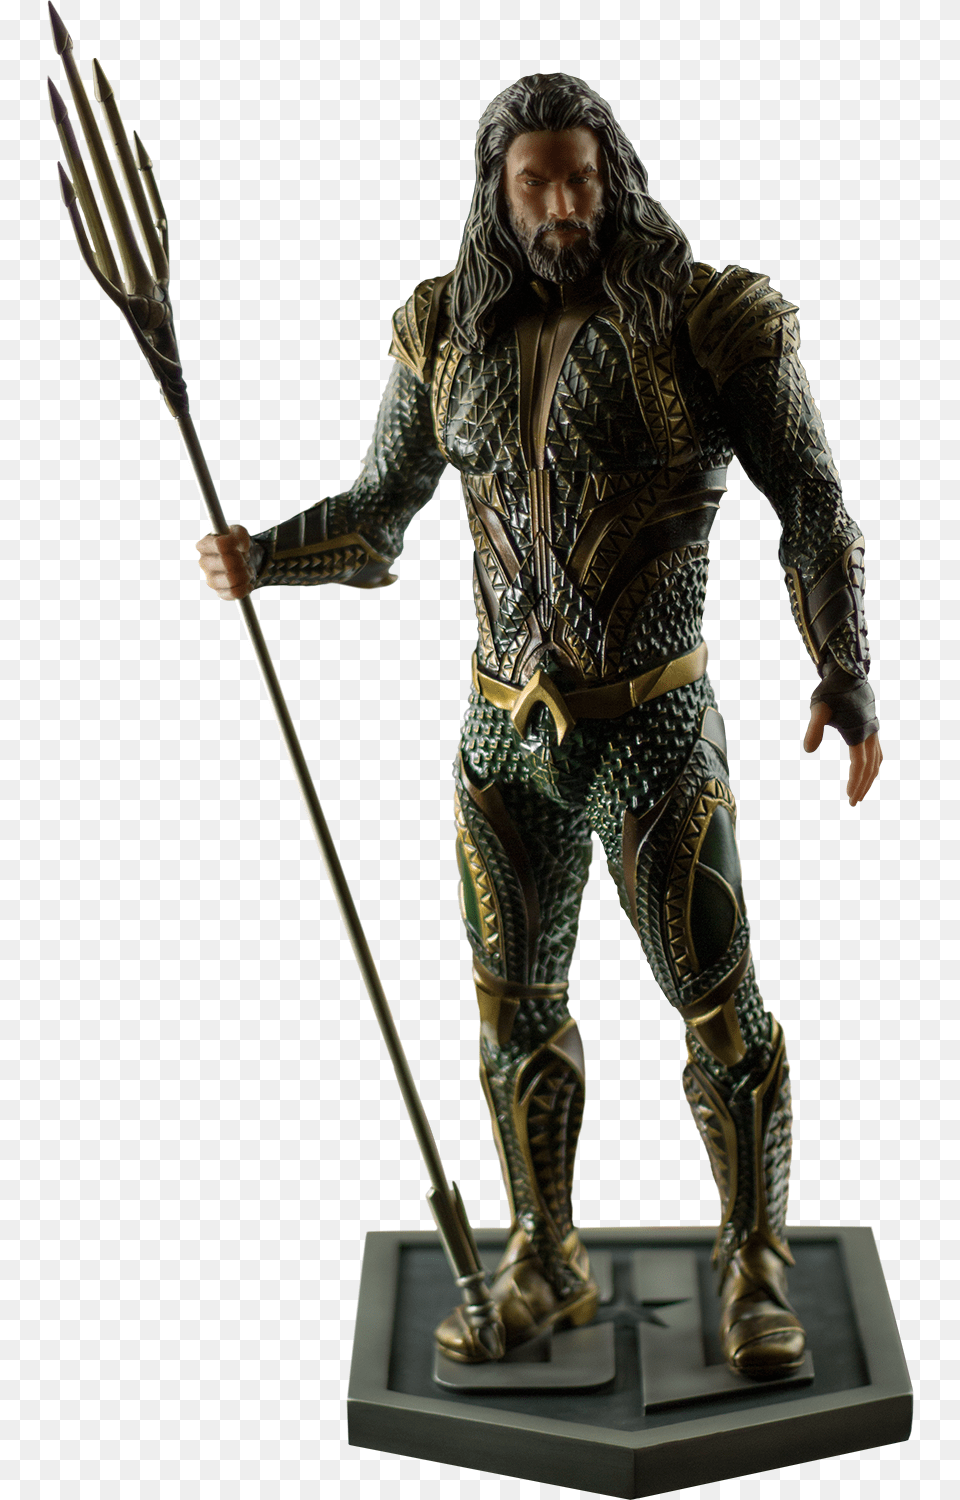 Justice League Justice League 2017 Aquaman 13 Statue, Bronze, Adult, Person, Man Png